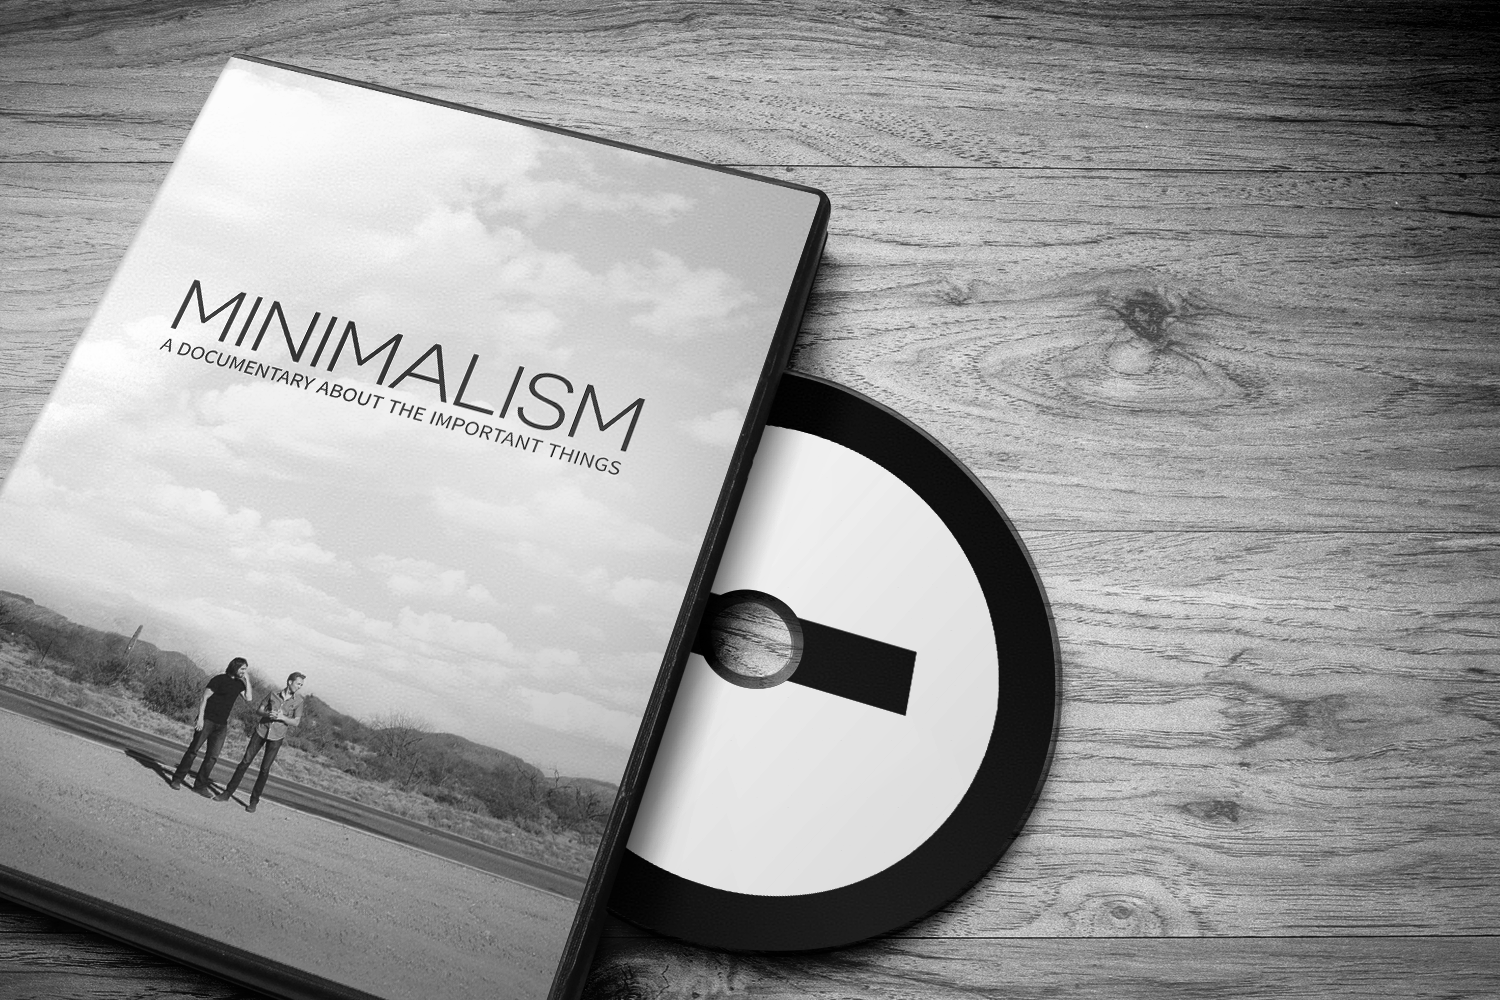 minimalism-documentary-on-dvd-the-minimalists